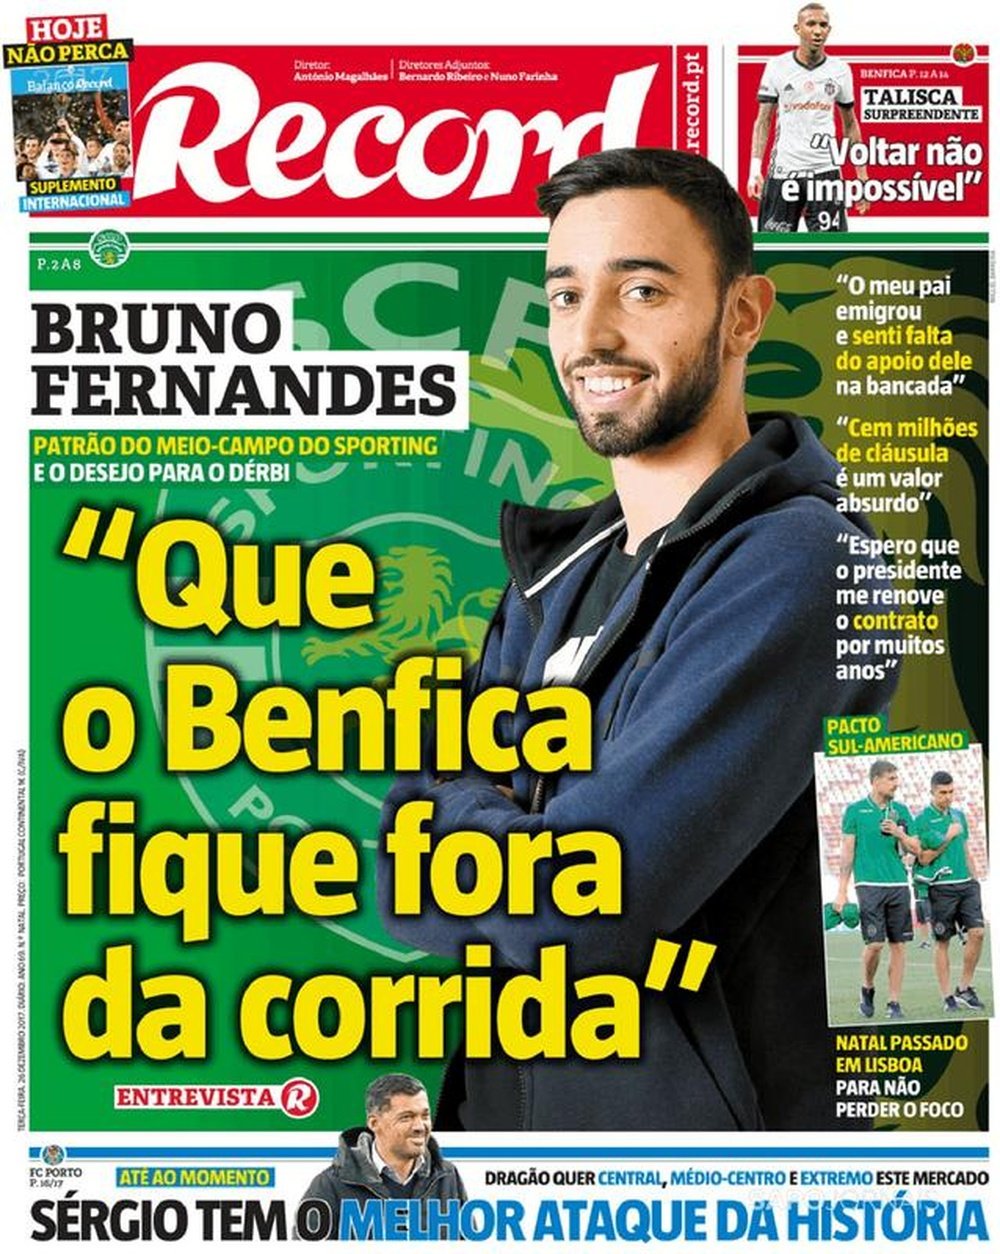 Capa do jornal 'Record', 26/12/2017. Record